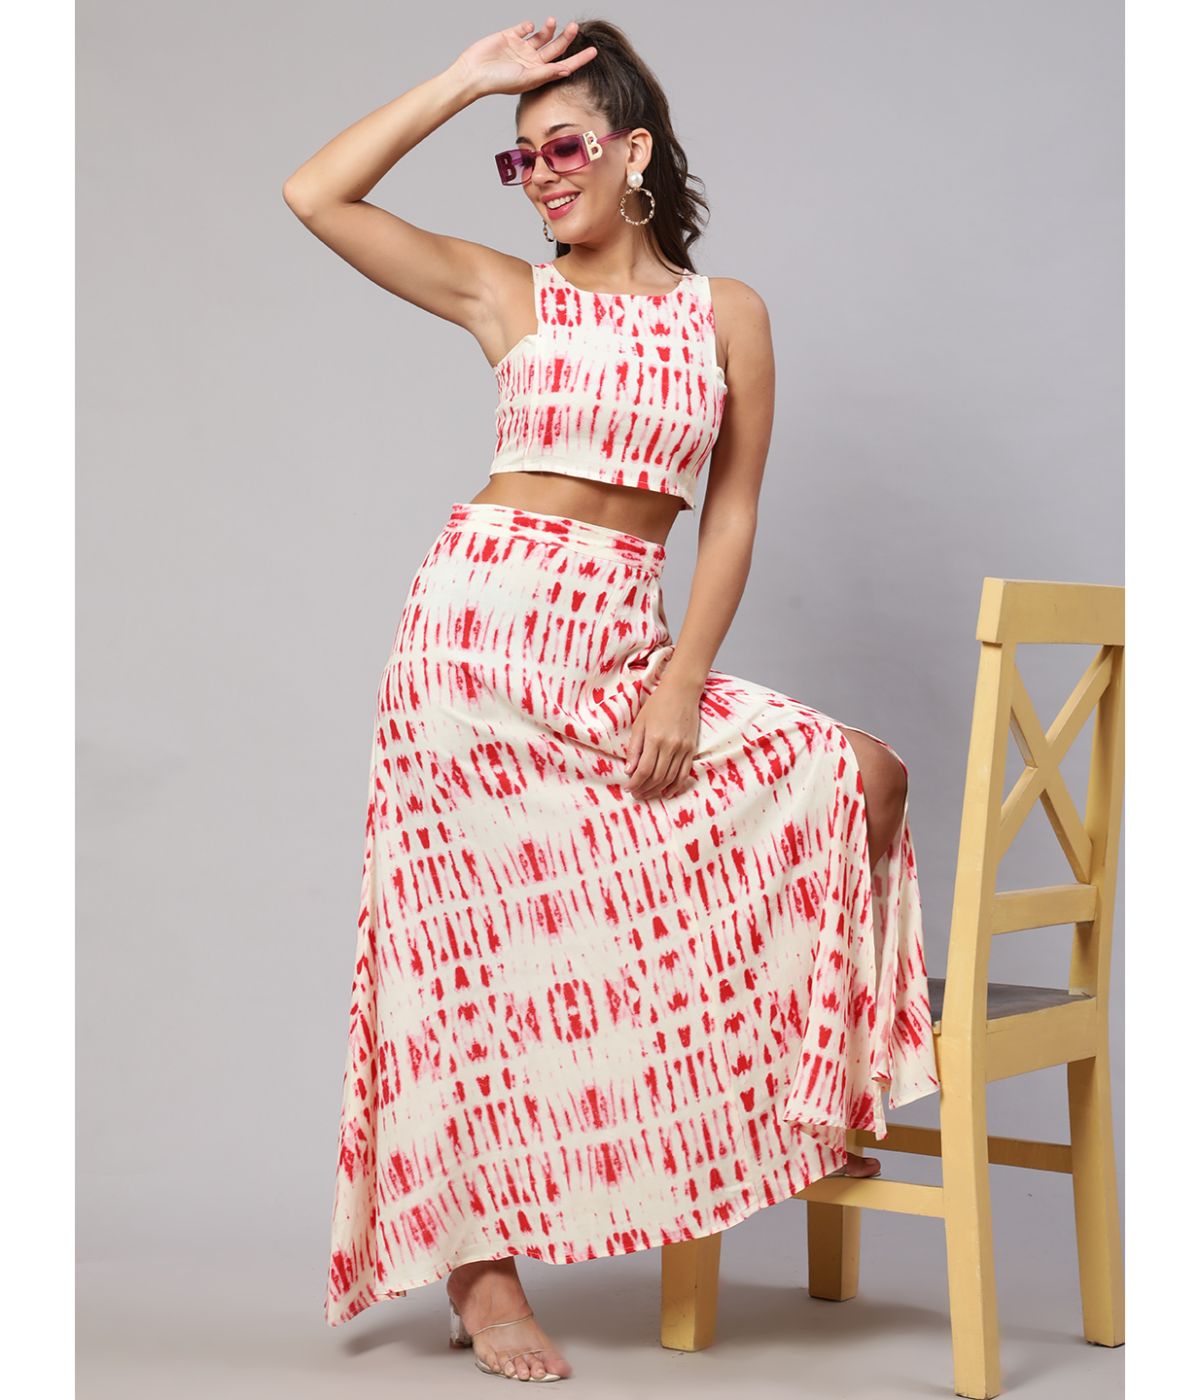 Daevish New Tie-Dye Printed Top Skirt Co Ord Set for Women & Girls